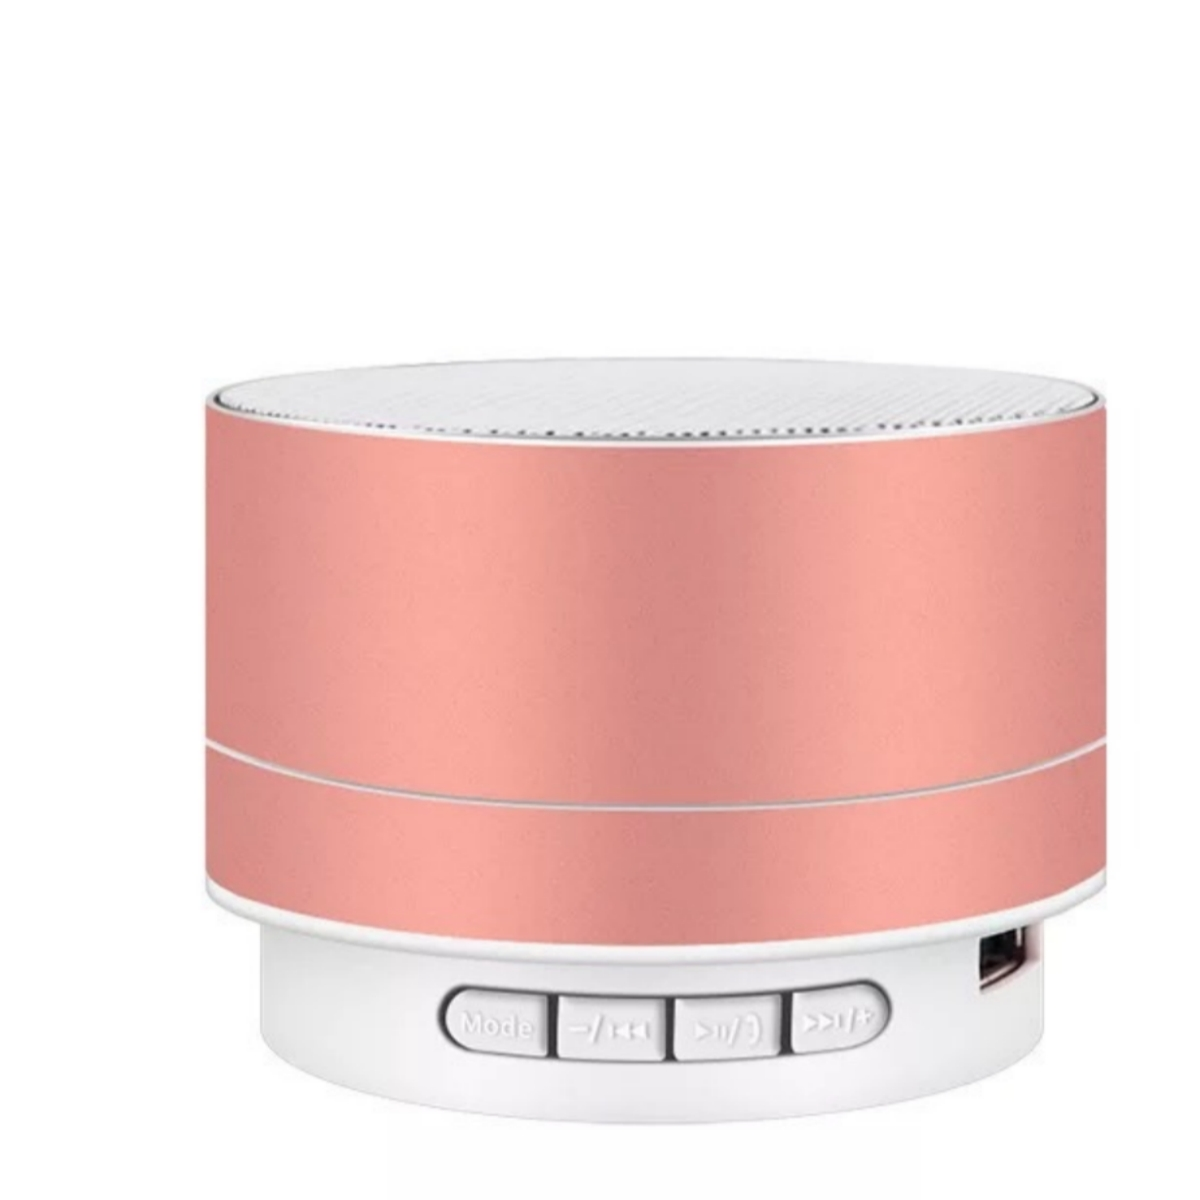 - Rosa Kompakt SHAOKE Surround-Sound 360° Hochwertig Lautsprecher, Tragbar Bluetooth-Lautsprecher Bluetooth